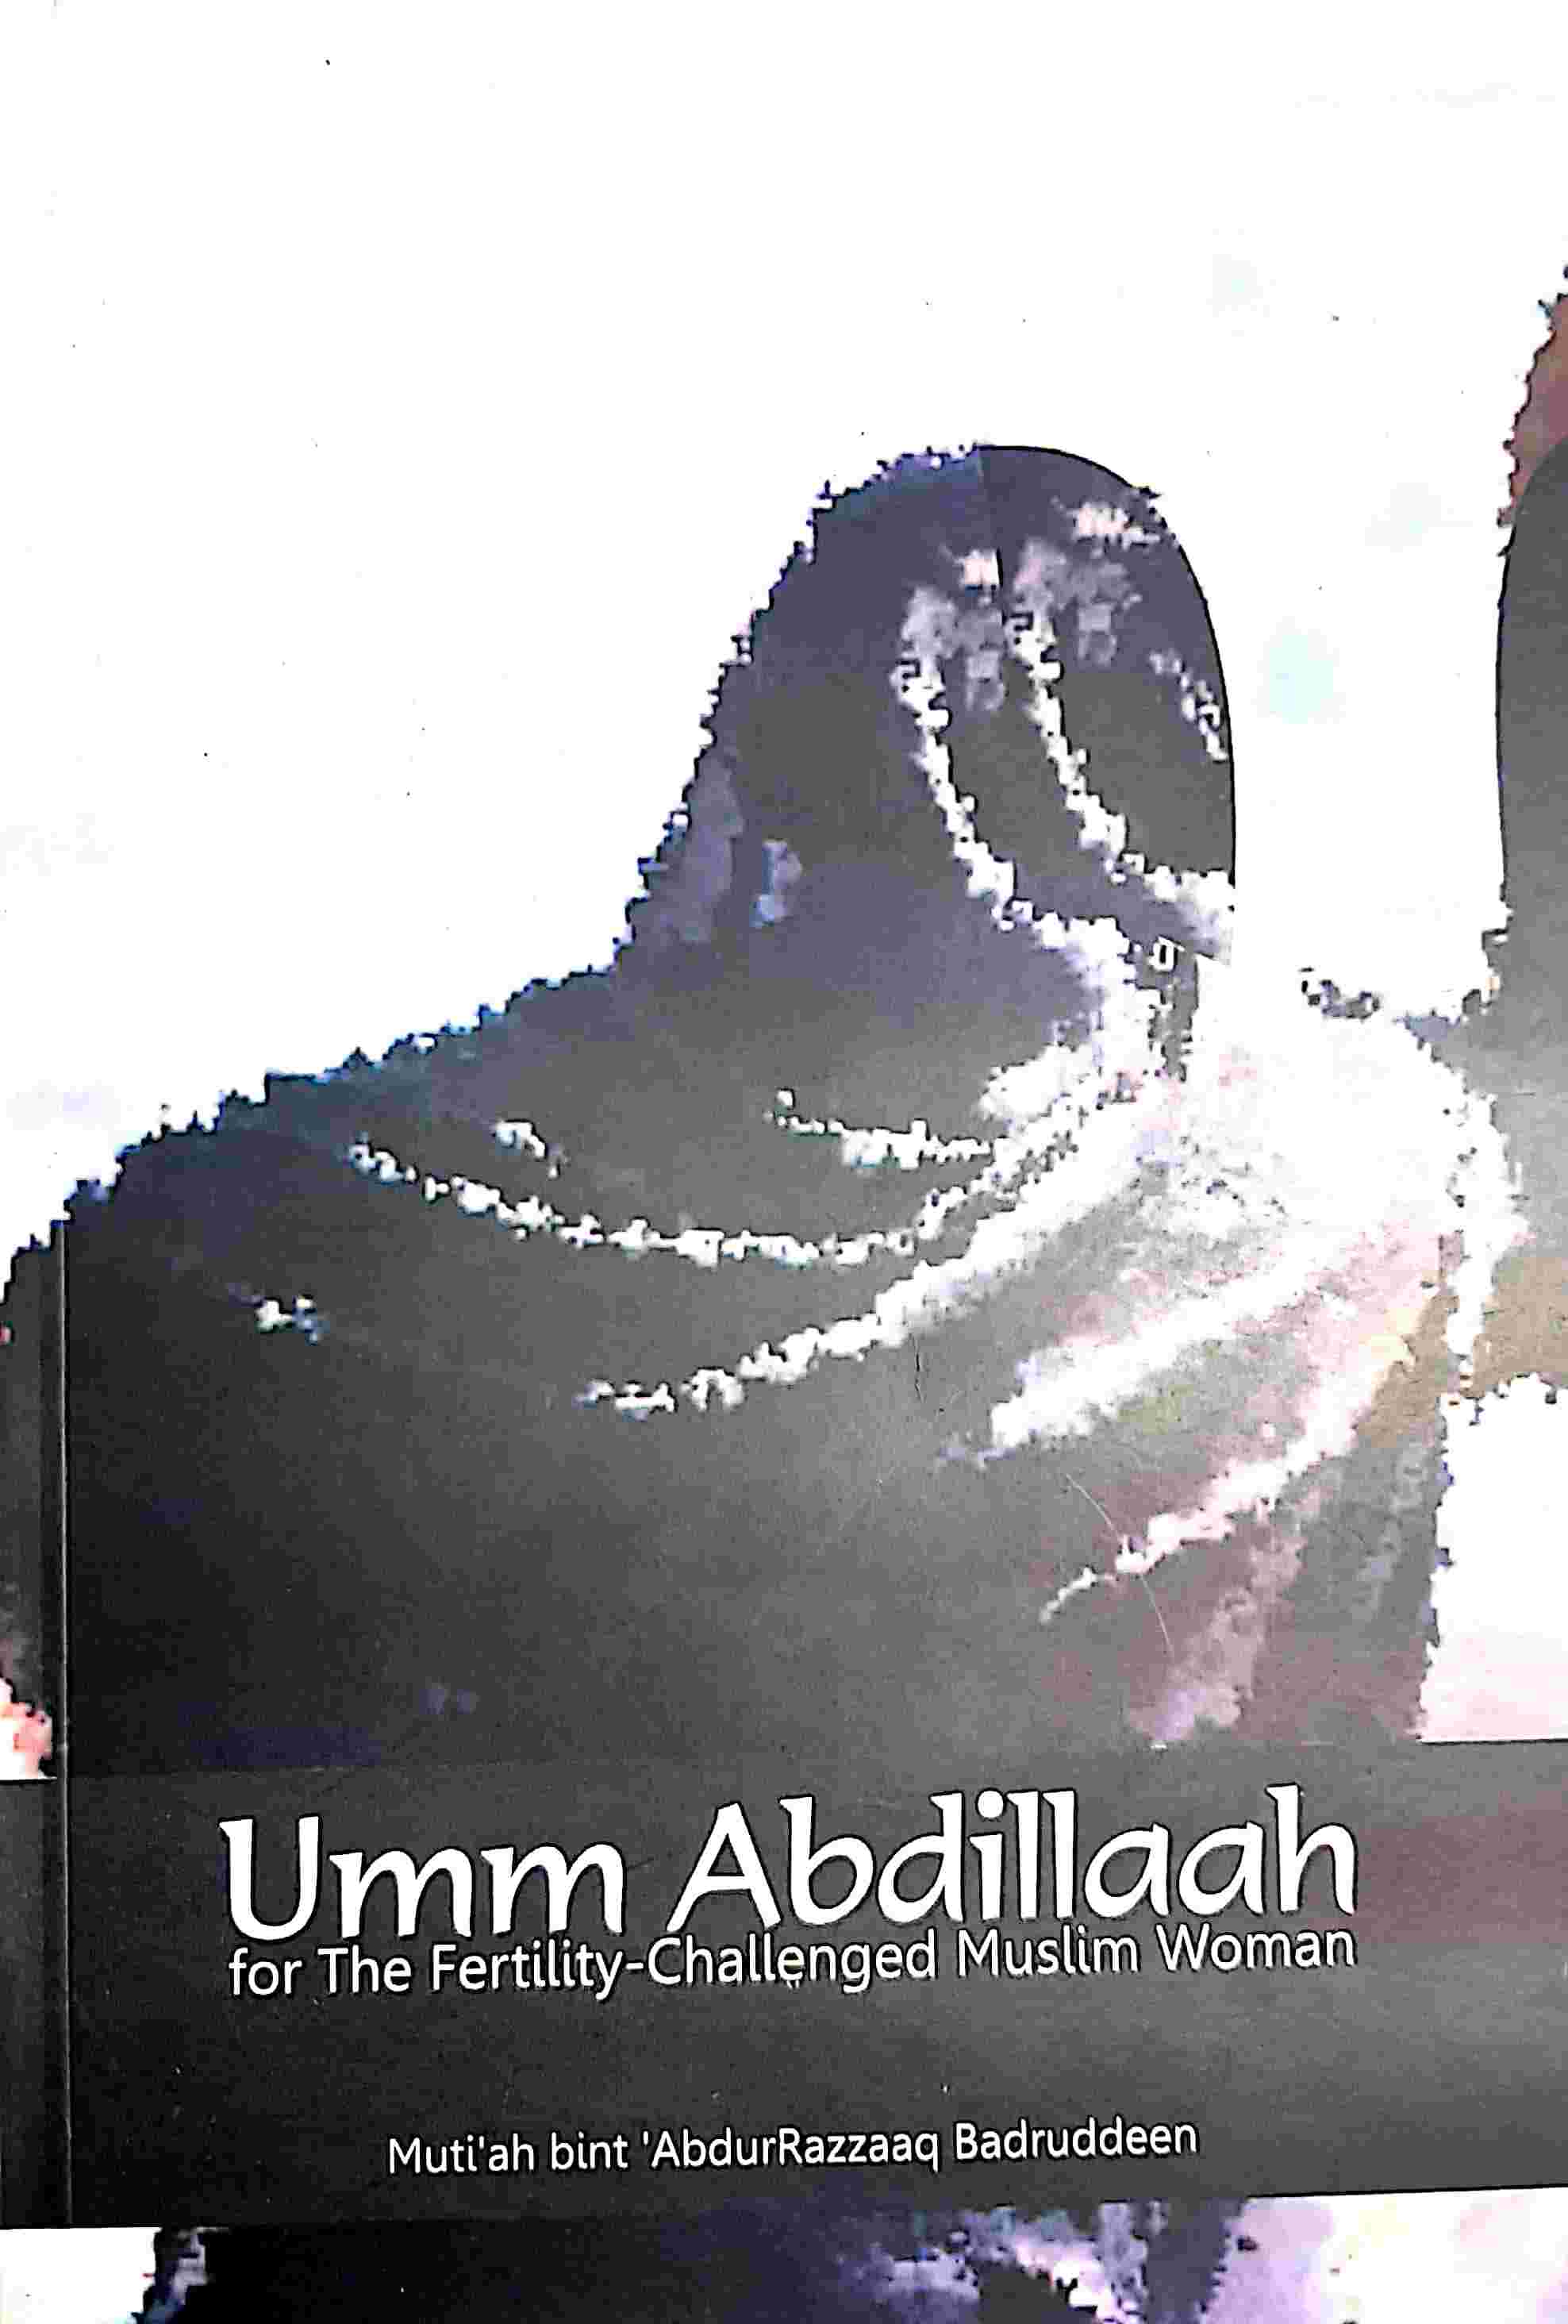 UMM ABDILLAAH